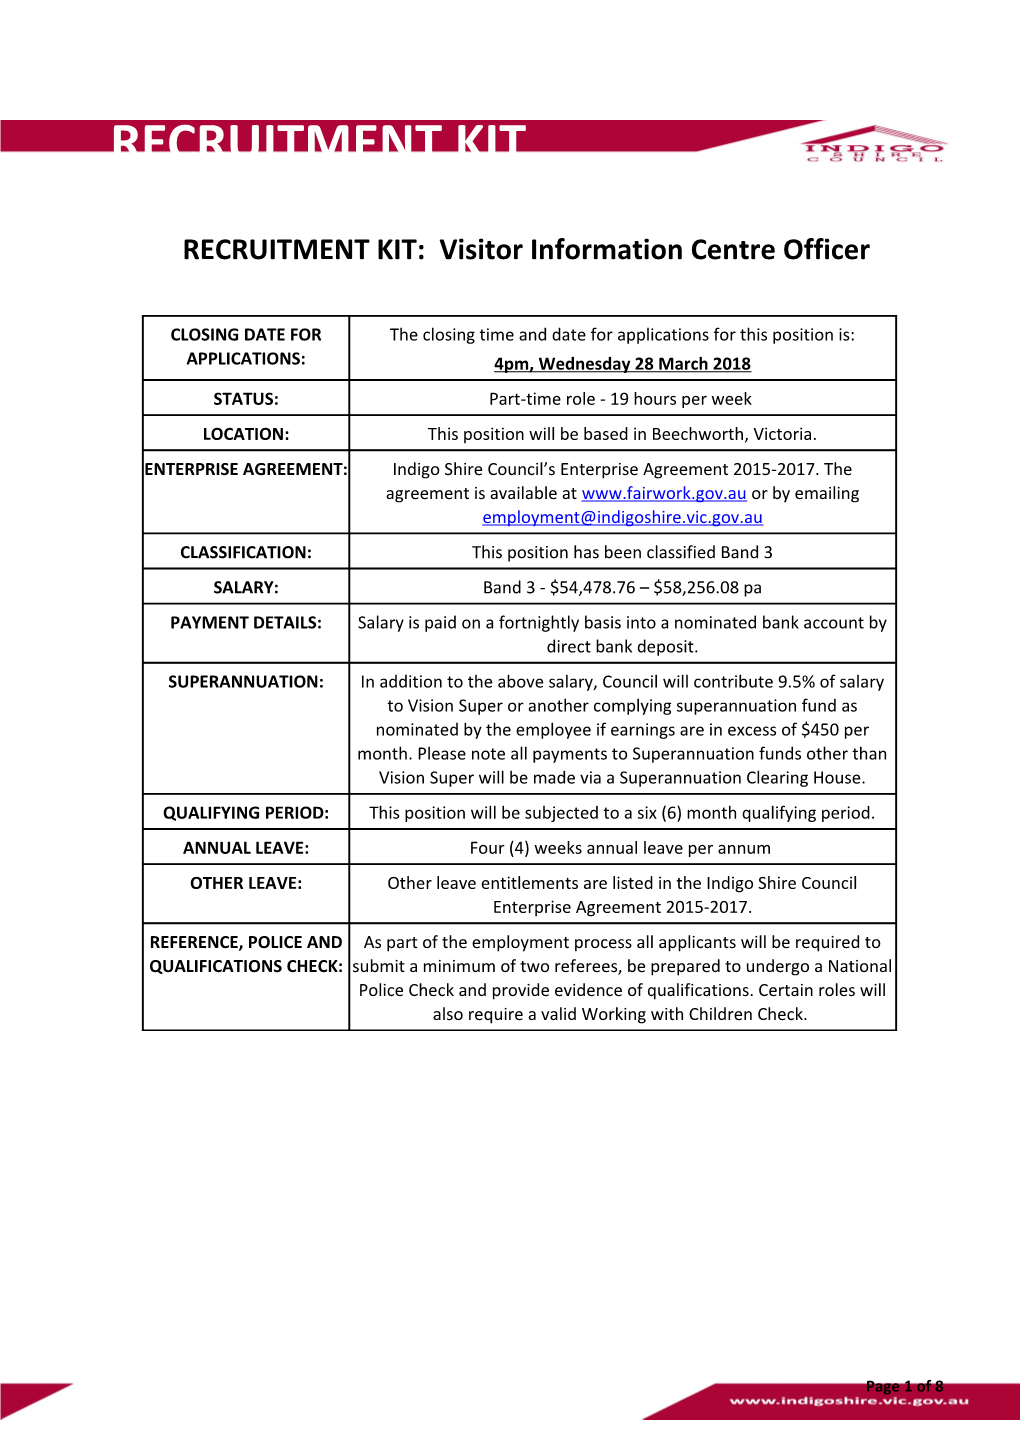 RECRUITMENT KIT: Visitor Information Centre Officer